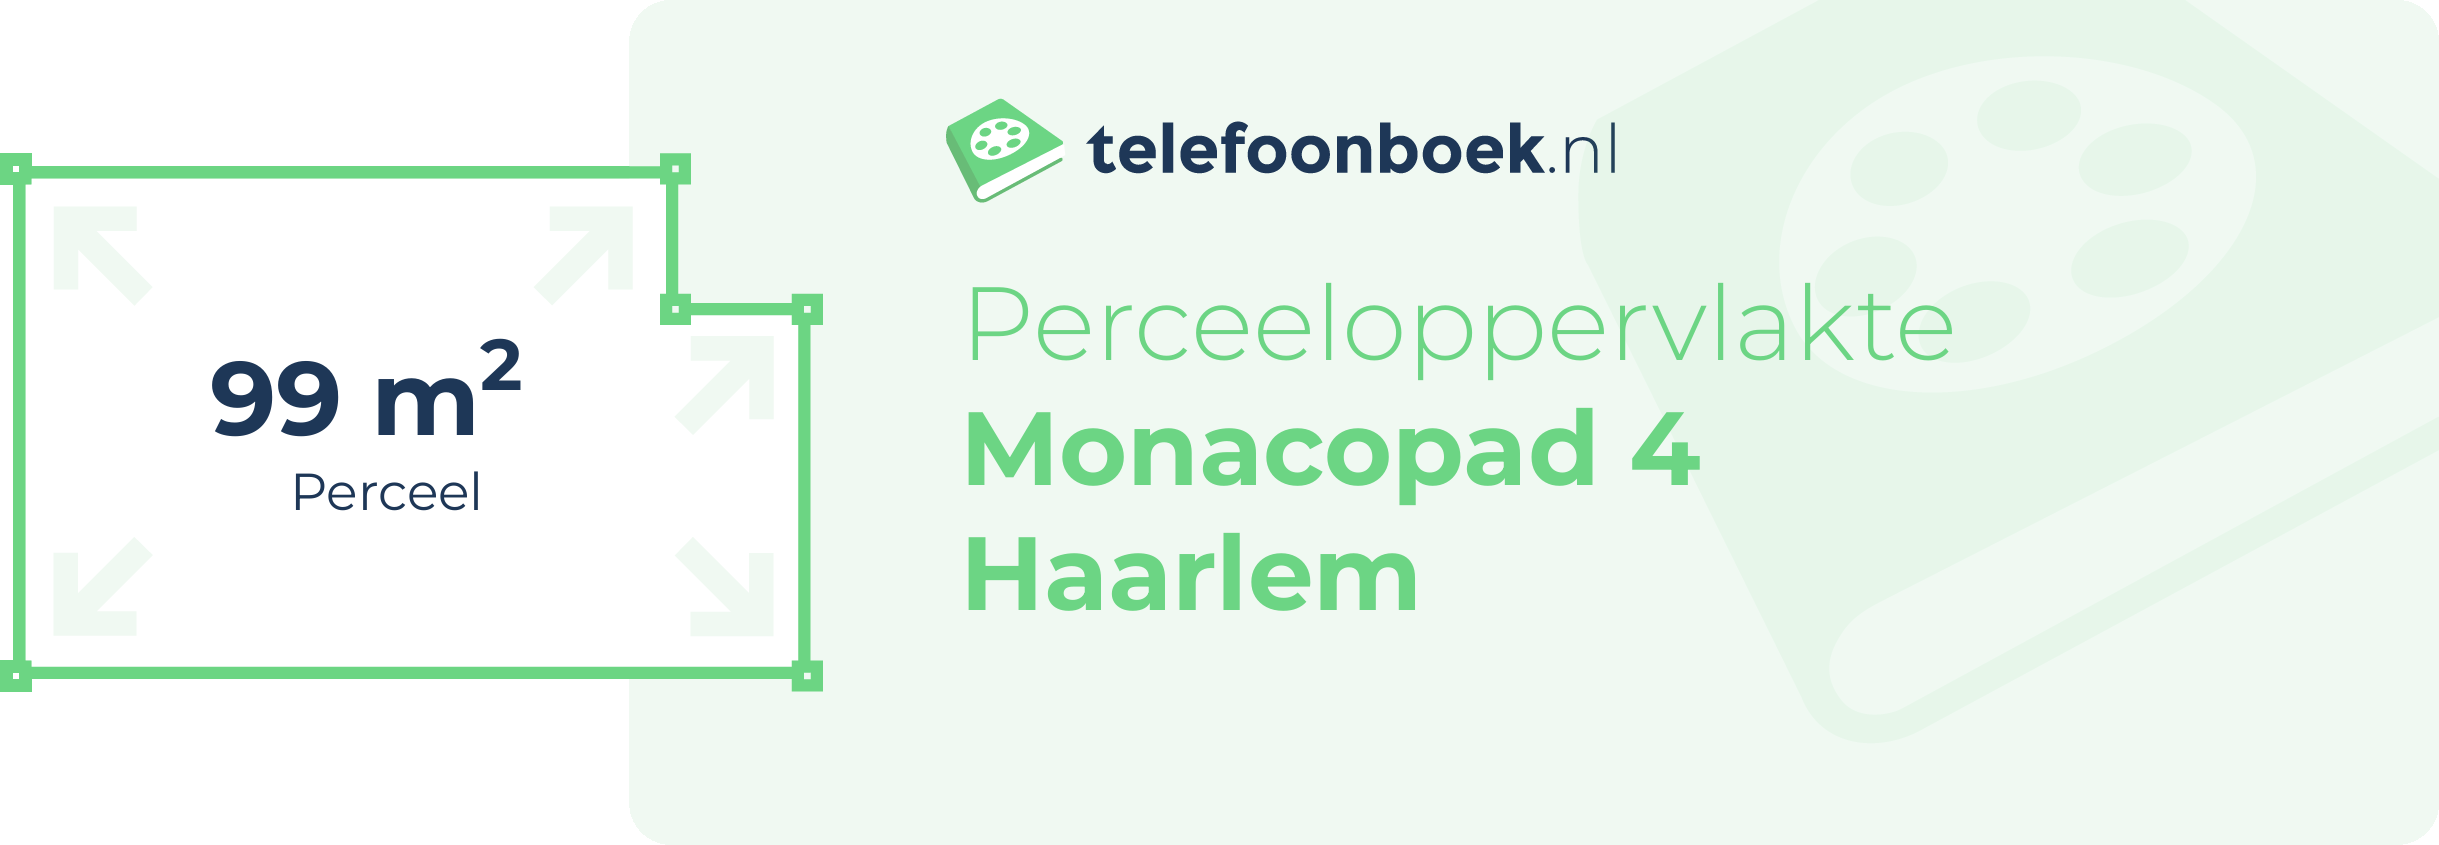 Perceeloppervlakte Monacopad 4 Haarlem